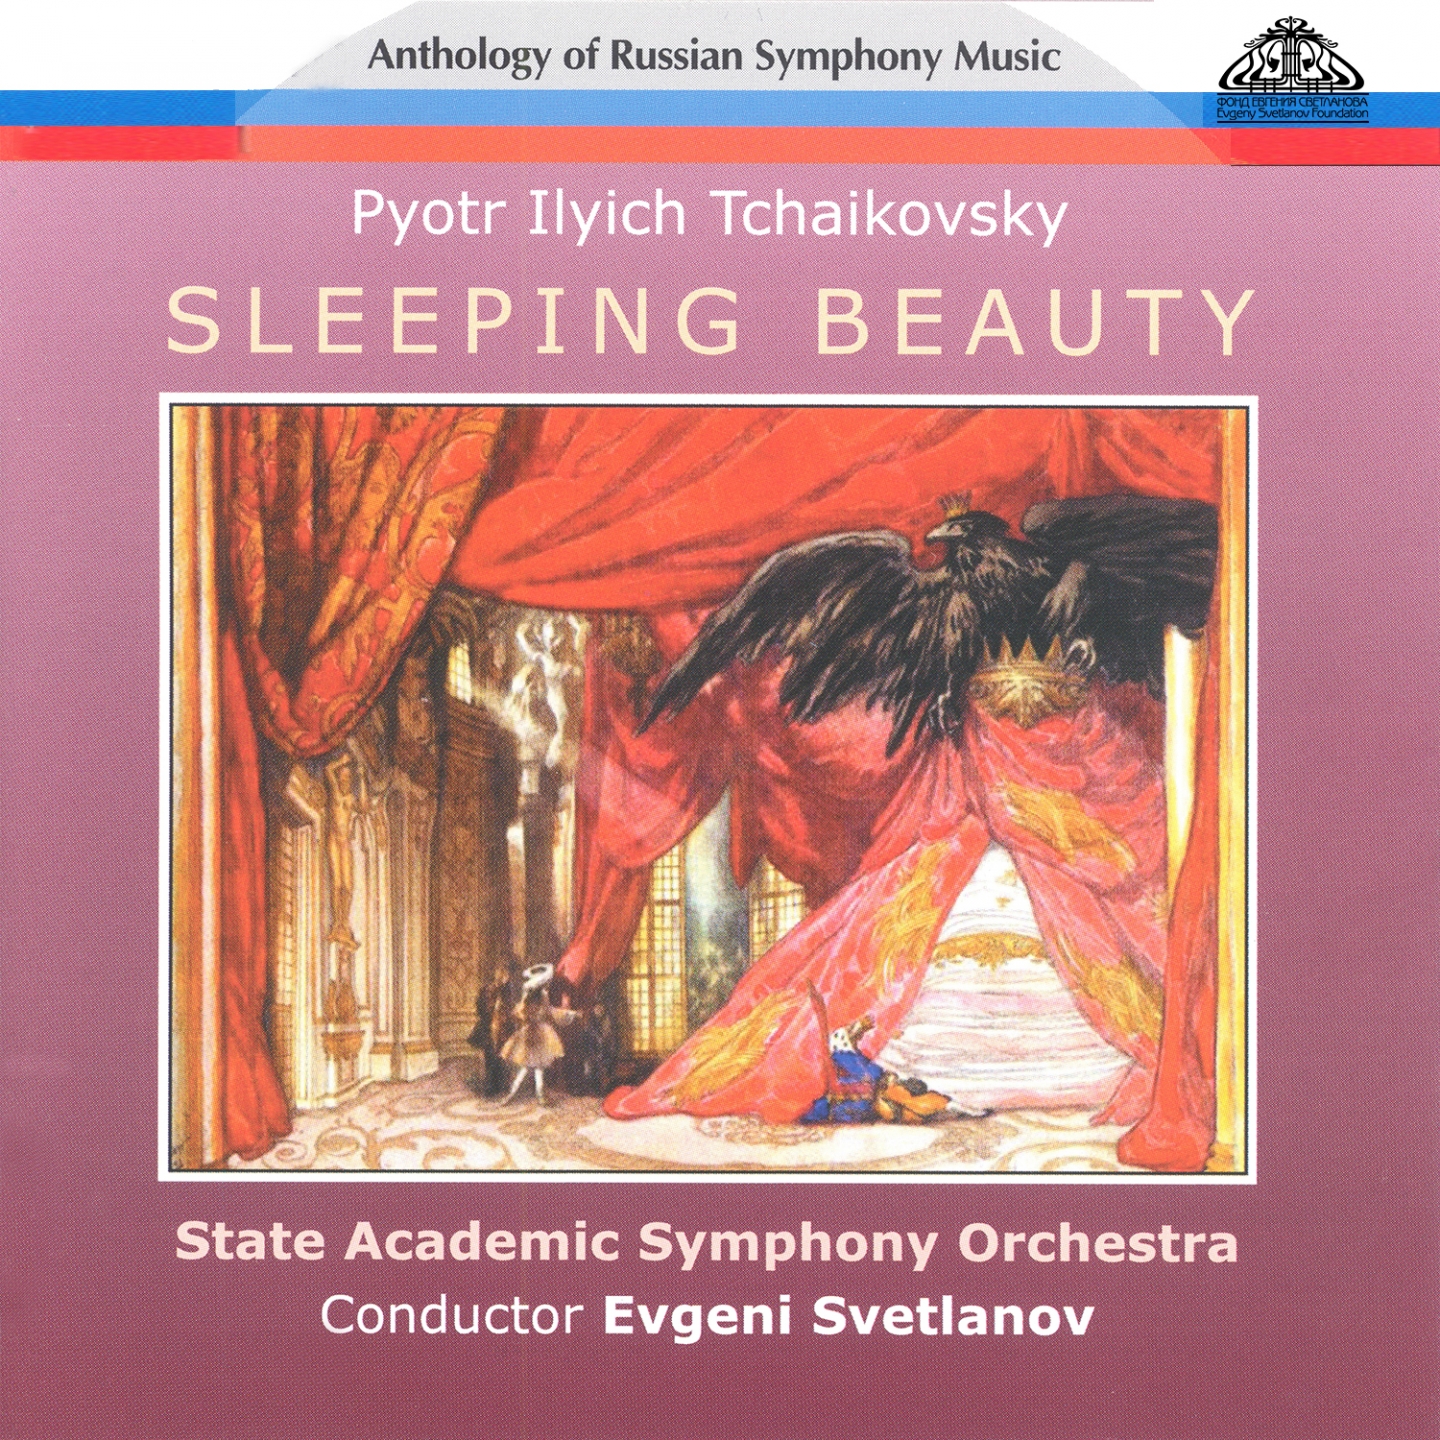 Sleeping Beauty, Op. 66, Act I, Scene 1: Grande valse villageoise